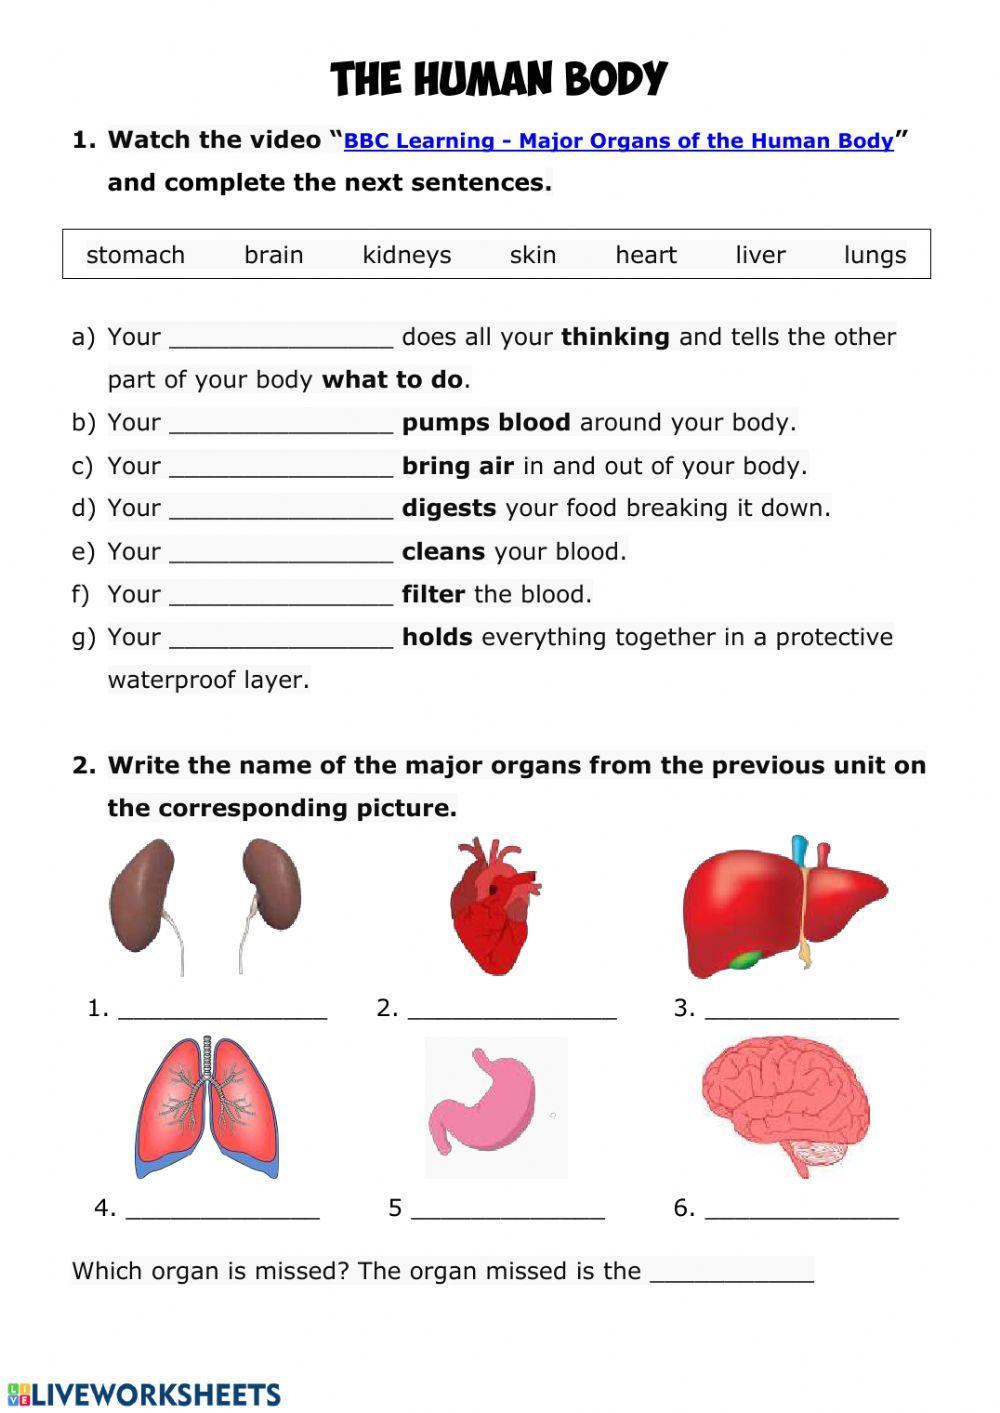 Human body interactive worksheet | Live Worksheets